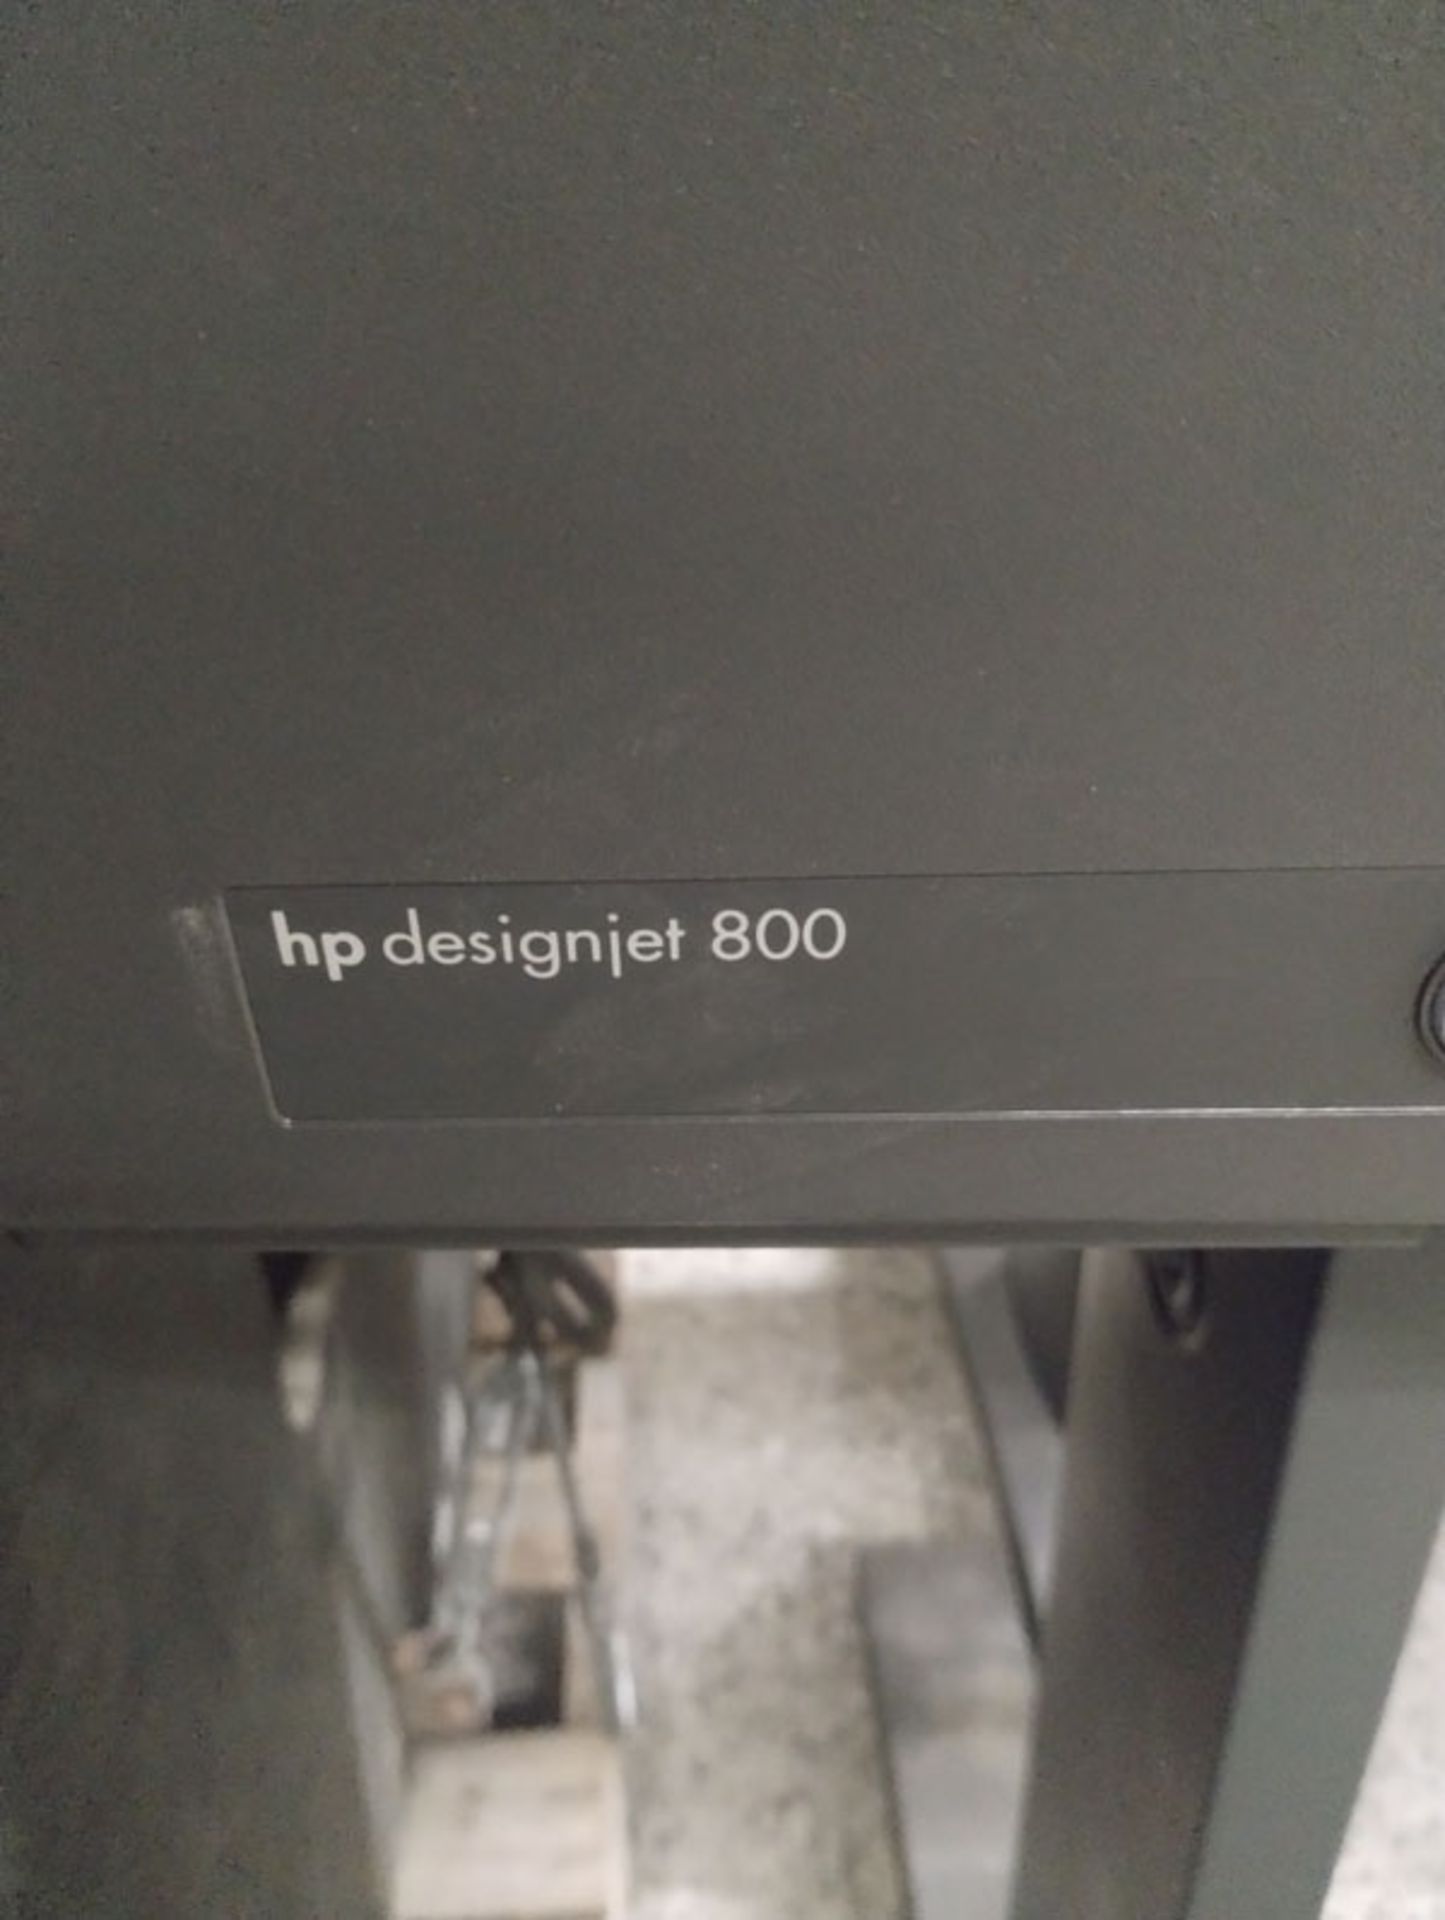 LOT OF 2 HP DEISGN JET 800 PRINTERS MODEL: C7779B - Image 2 of 8